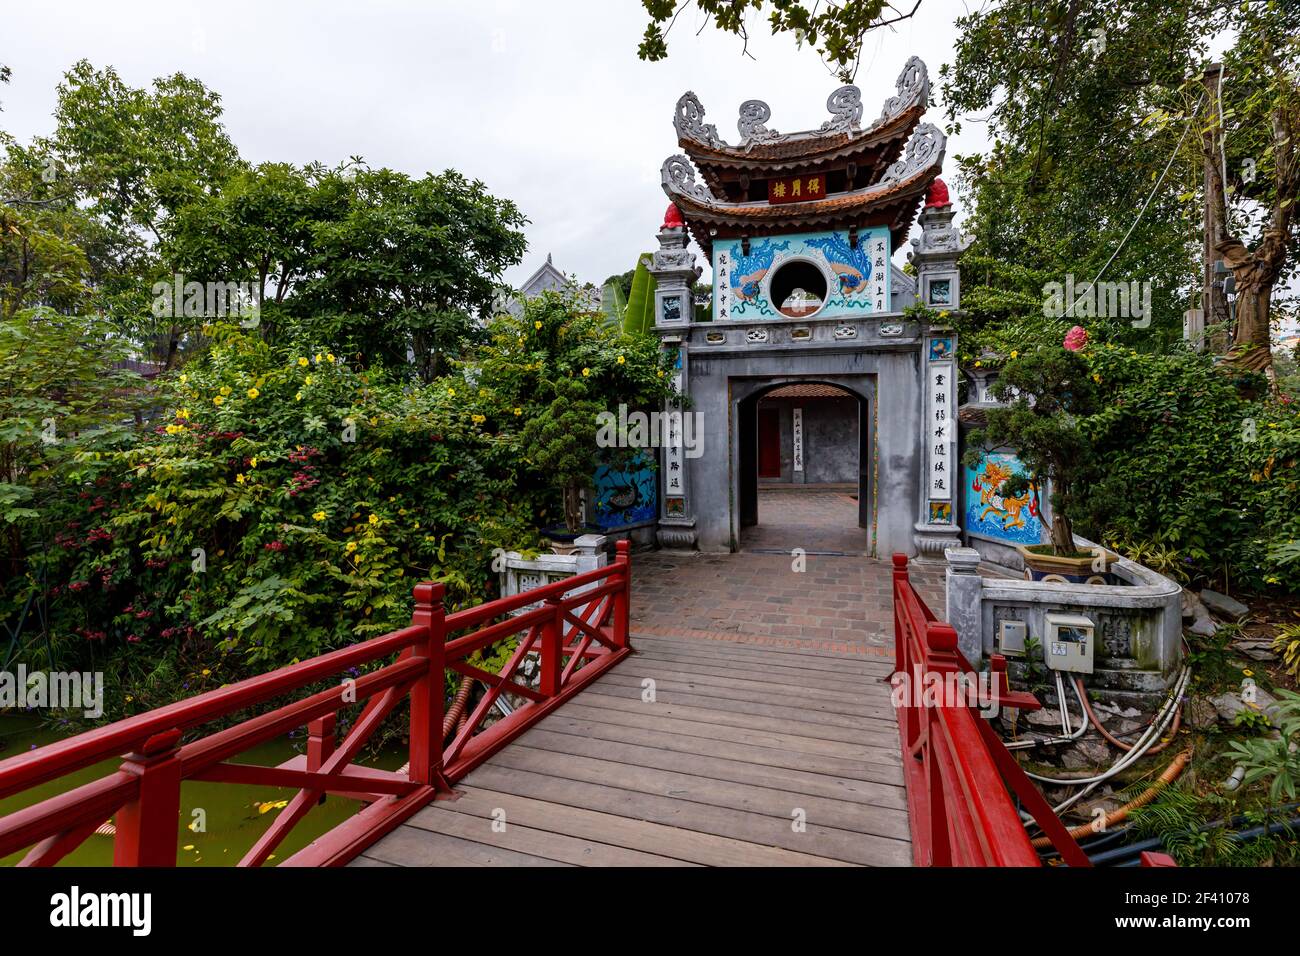 The Ngoc Son Temple of Lake Hoan Kiem in Hanoi in Vietnam Stock Photo -  Alamy